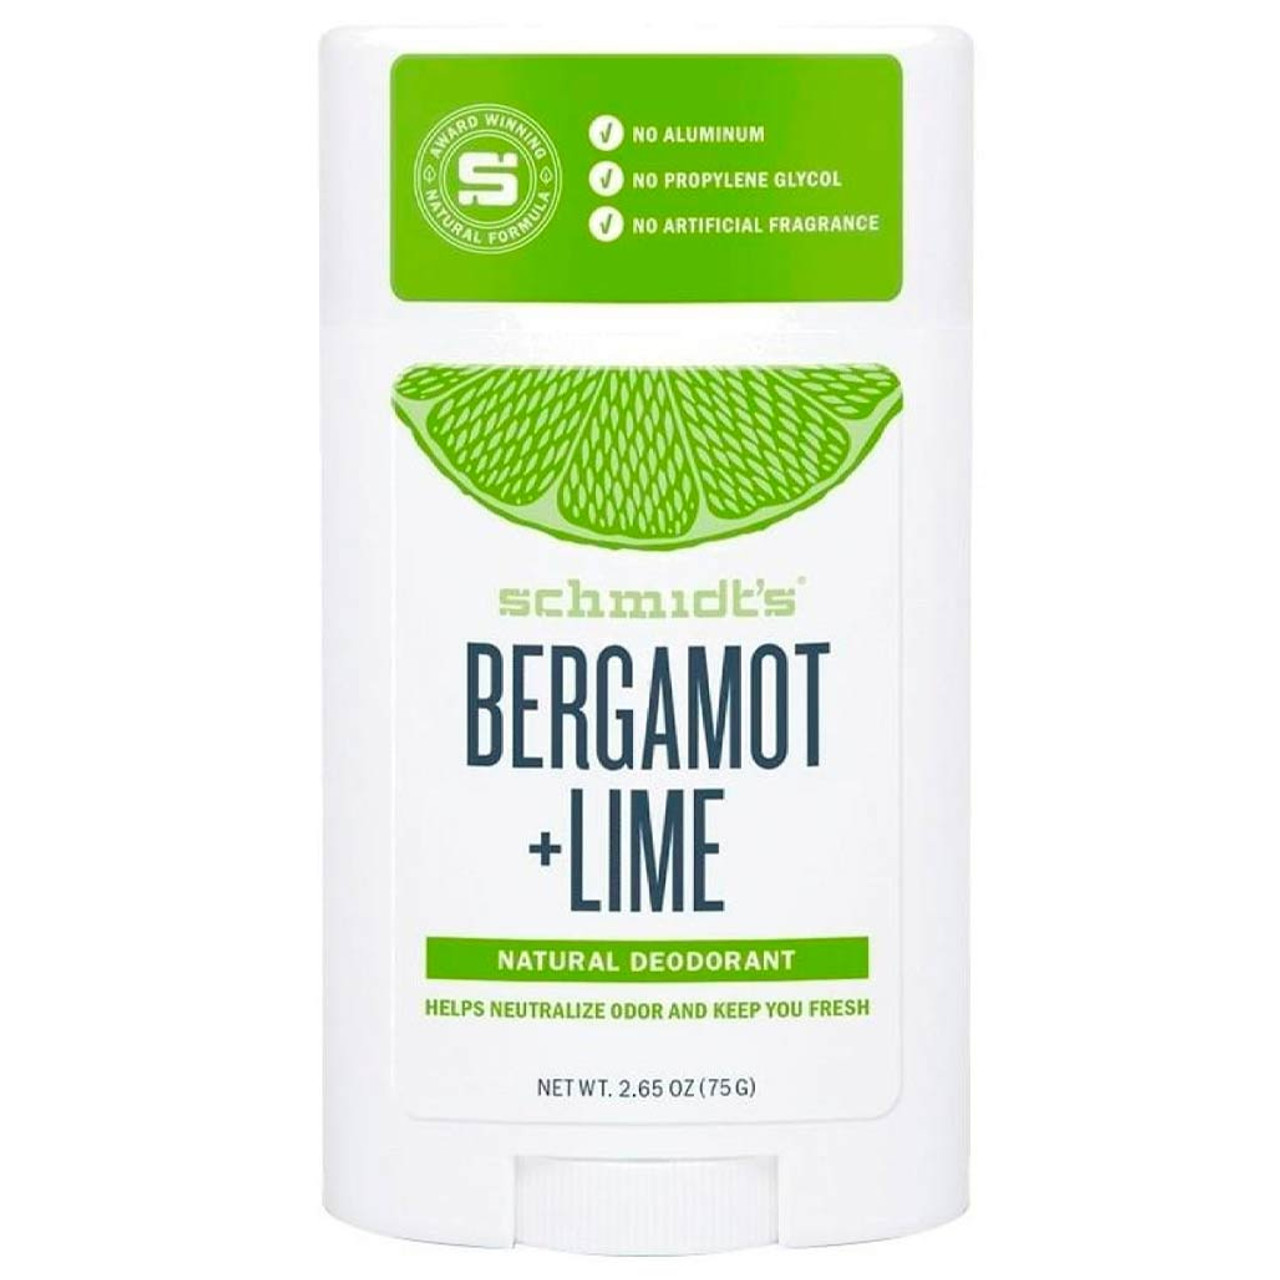 Schmidt's Deodorant - Bergamot &